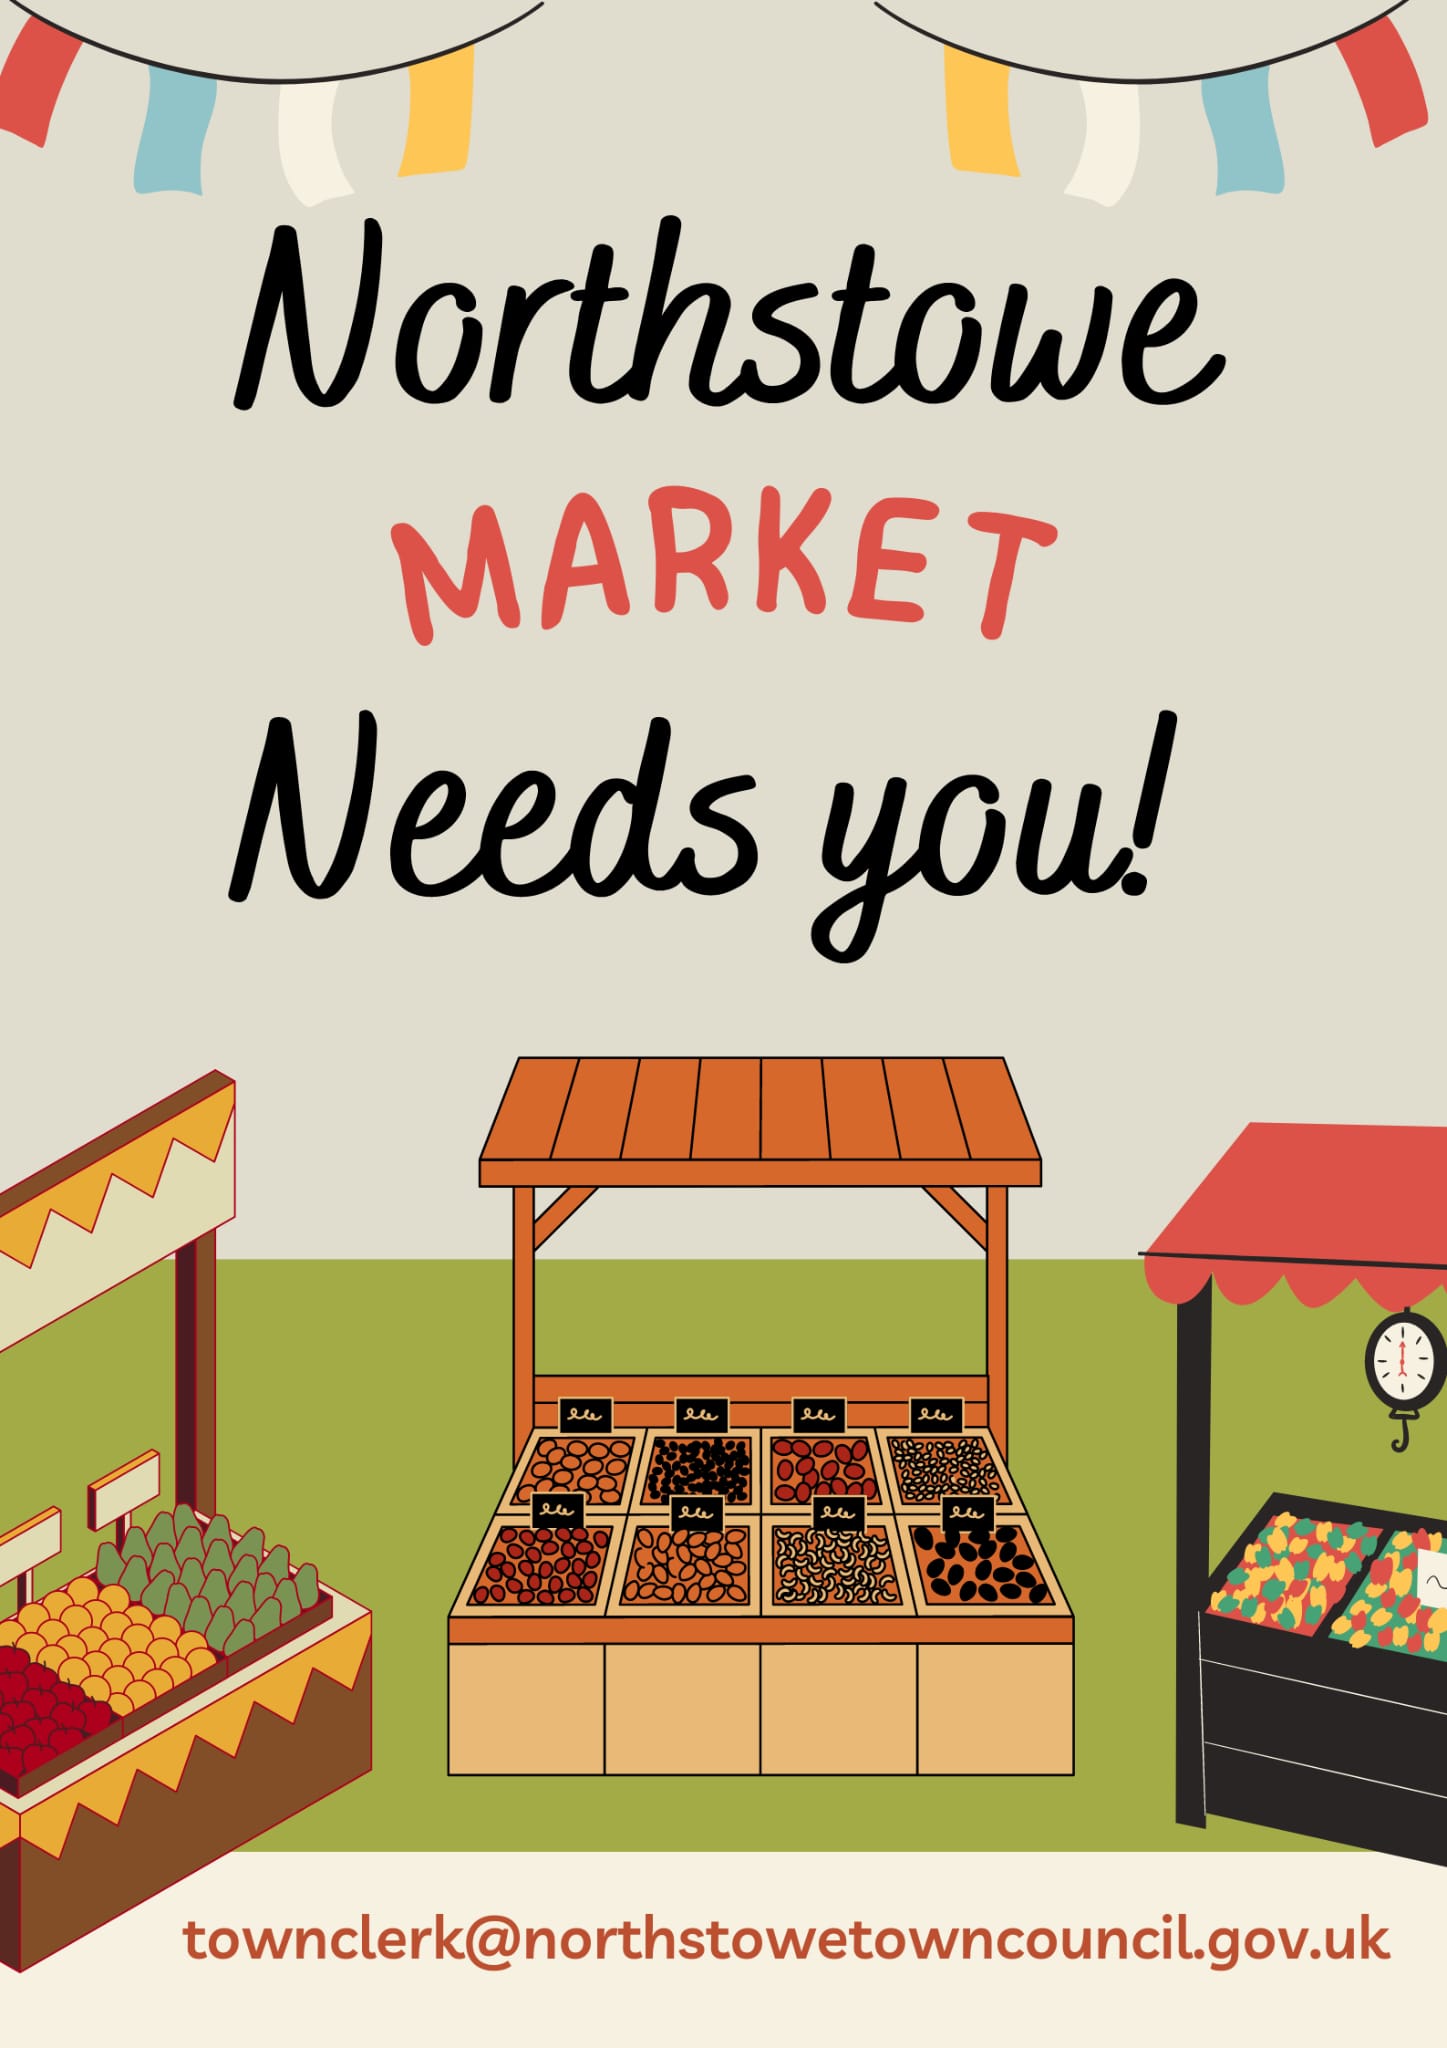 Northstowe market needs you!